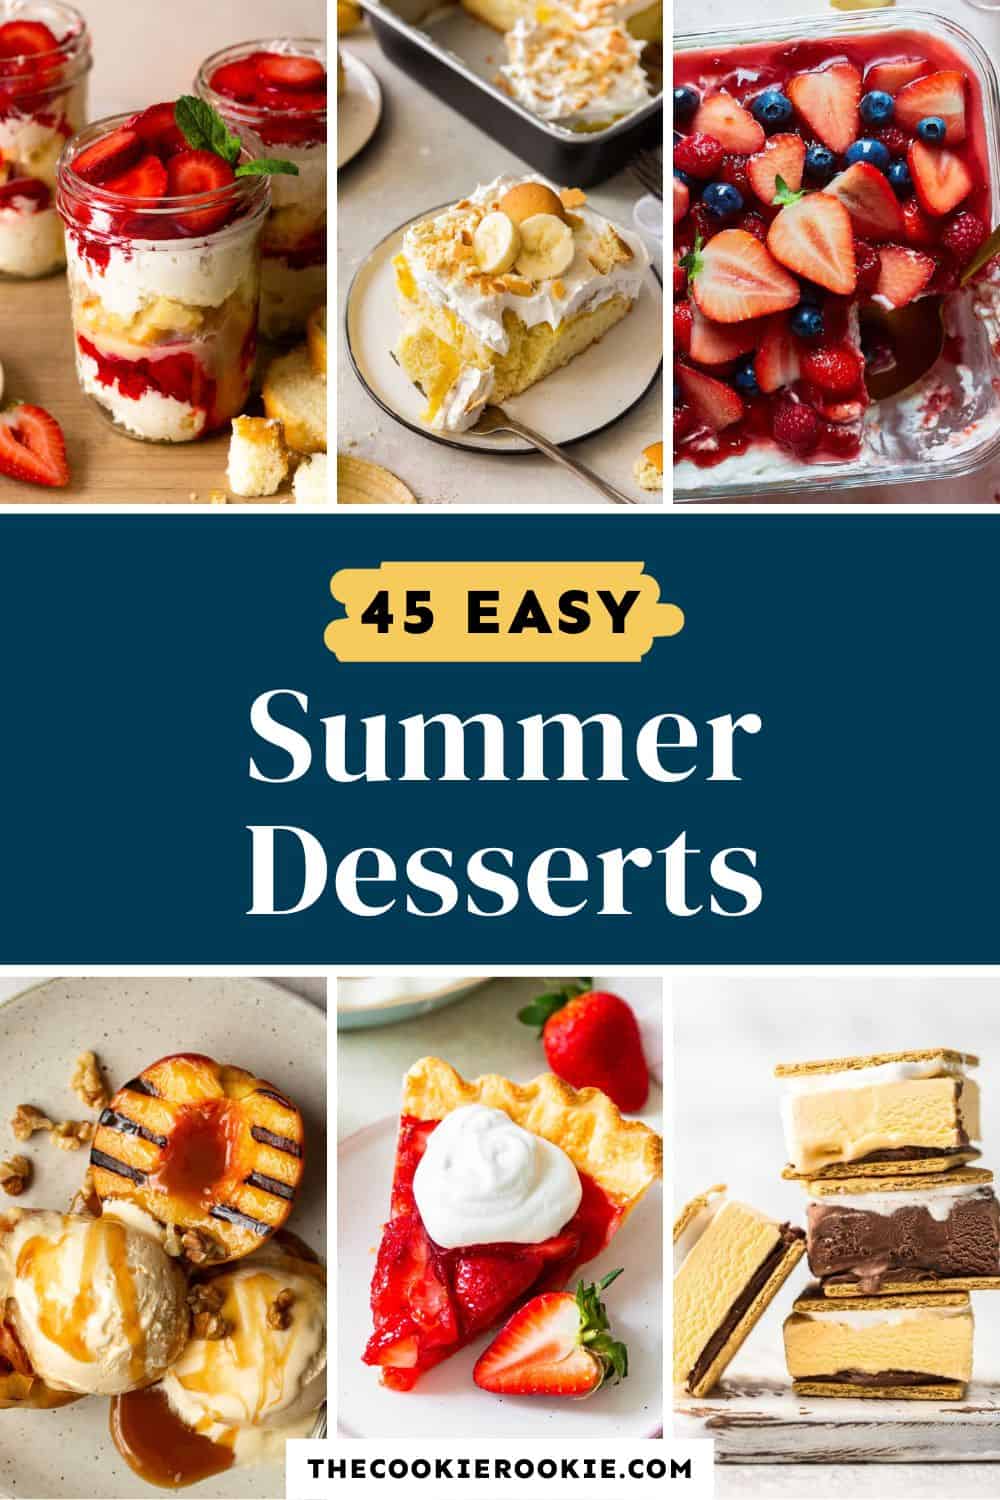 45 easy summer desserts Pinterest